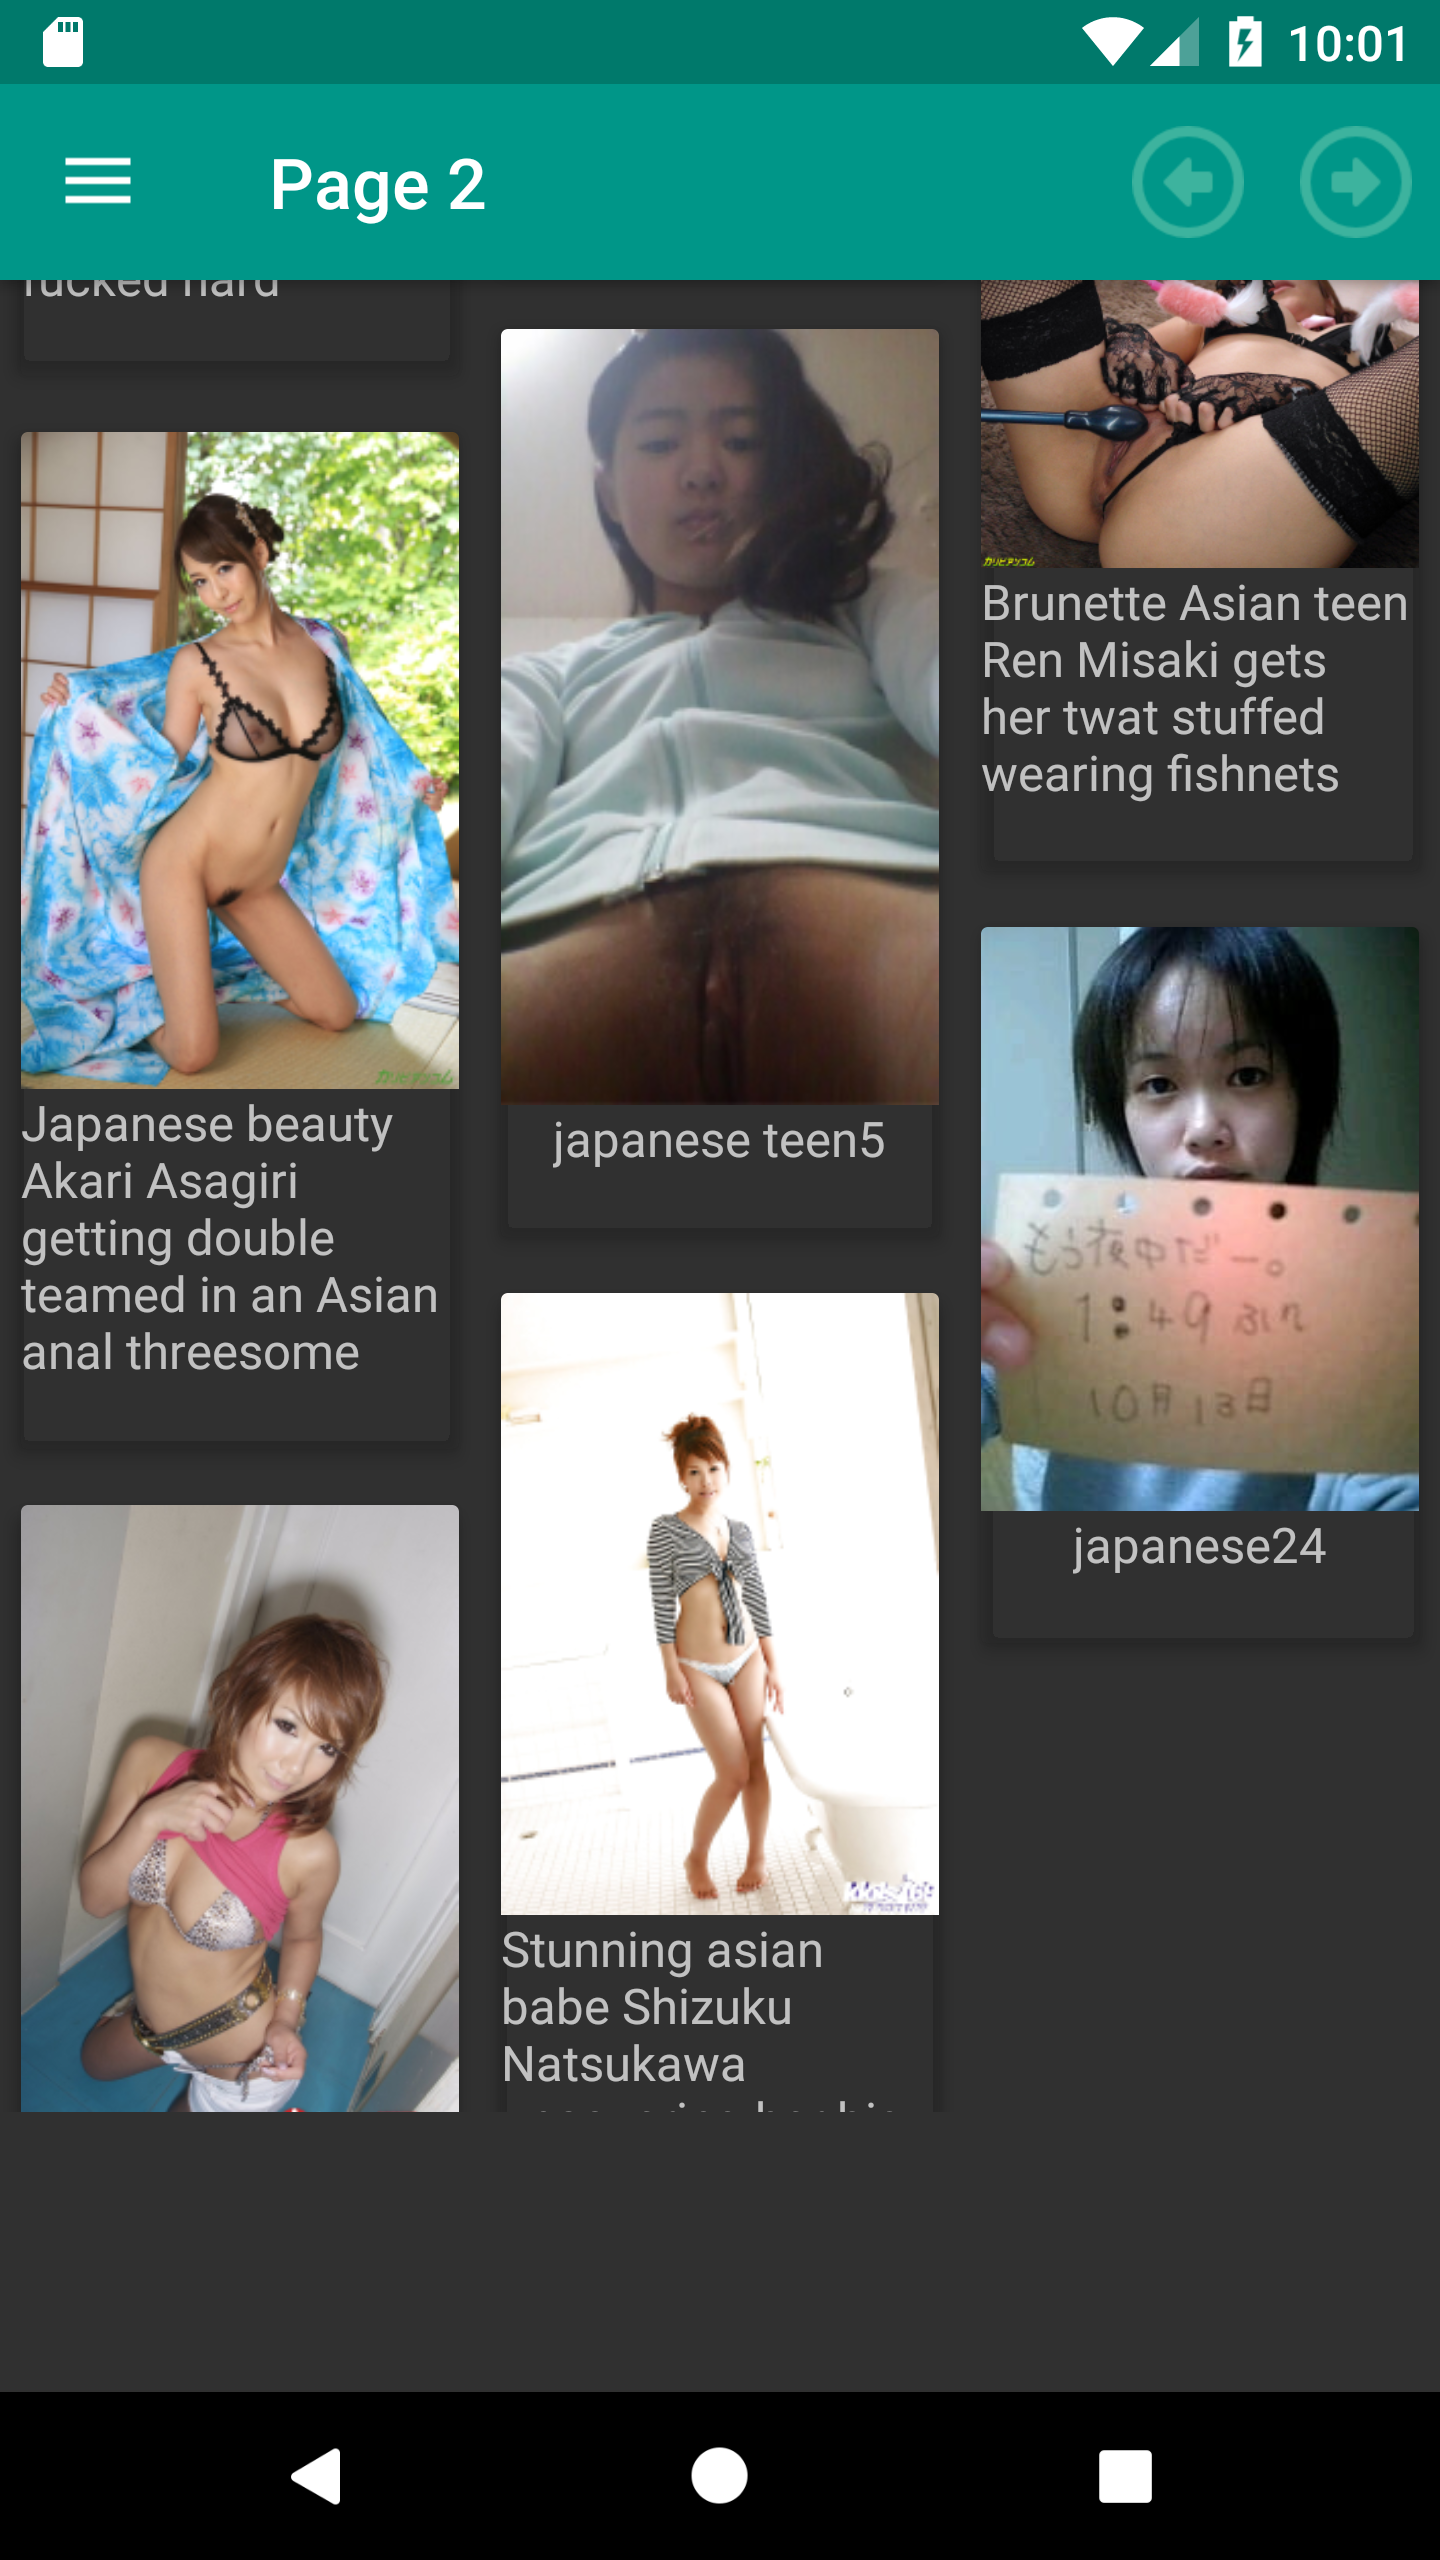 Japanese Porn hantai,apk,pict,femboy,download,erotic,manga,hot,apks,sexy,hentai,star,pornstars,porn,image,pics,wallpapers,hetai,gallery,photo,galleries